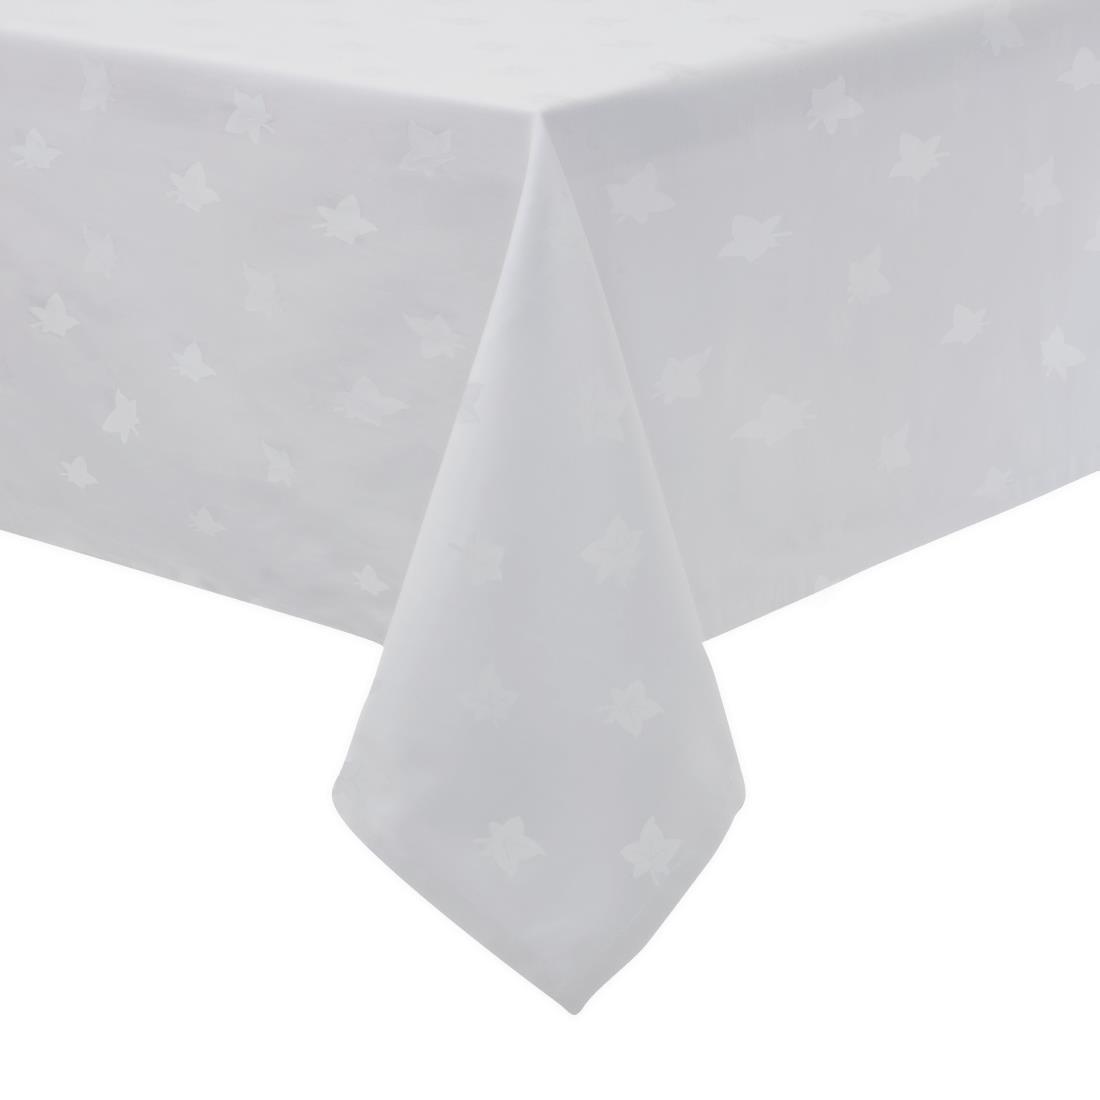 Mitre Luxury Luxor Tablecloth Ivy Leaf White 900 x 900mm - GW455  - 1